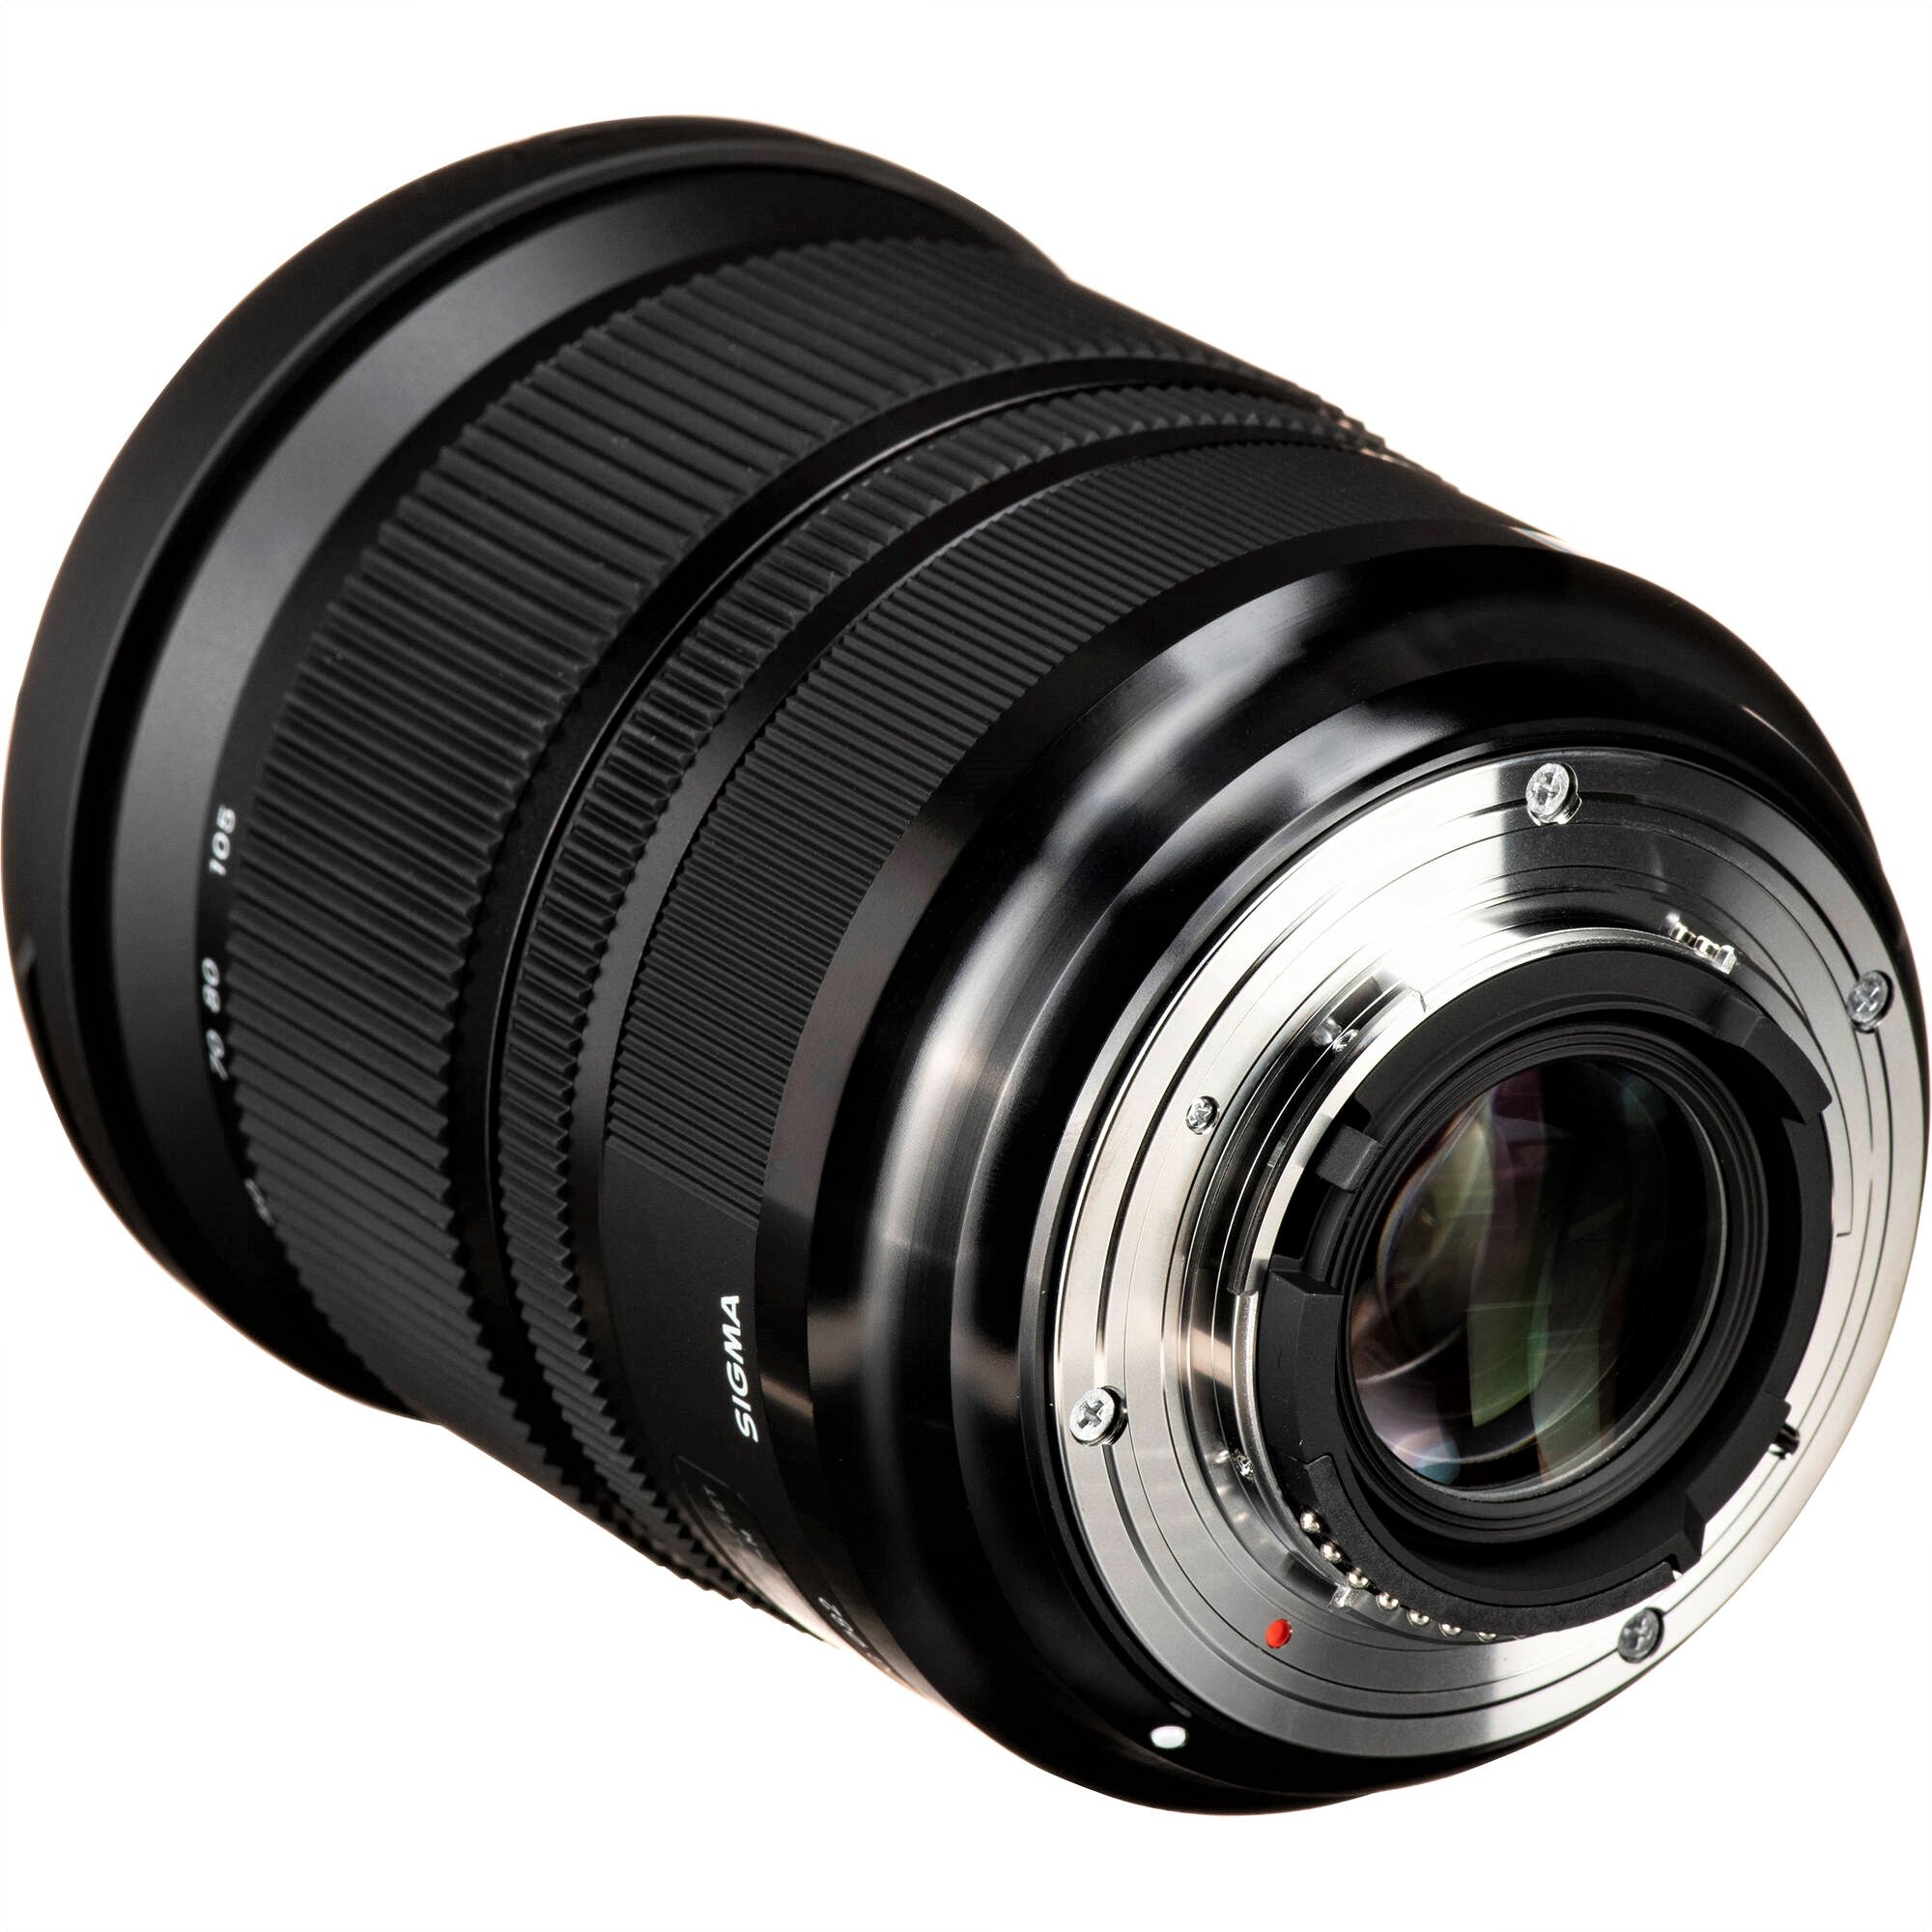 Sigma 24-105mm F4.0 DG OS HSM Art Lens (Nikon F) in a Back-Side View